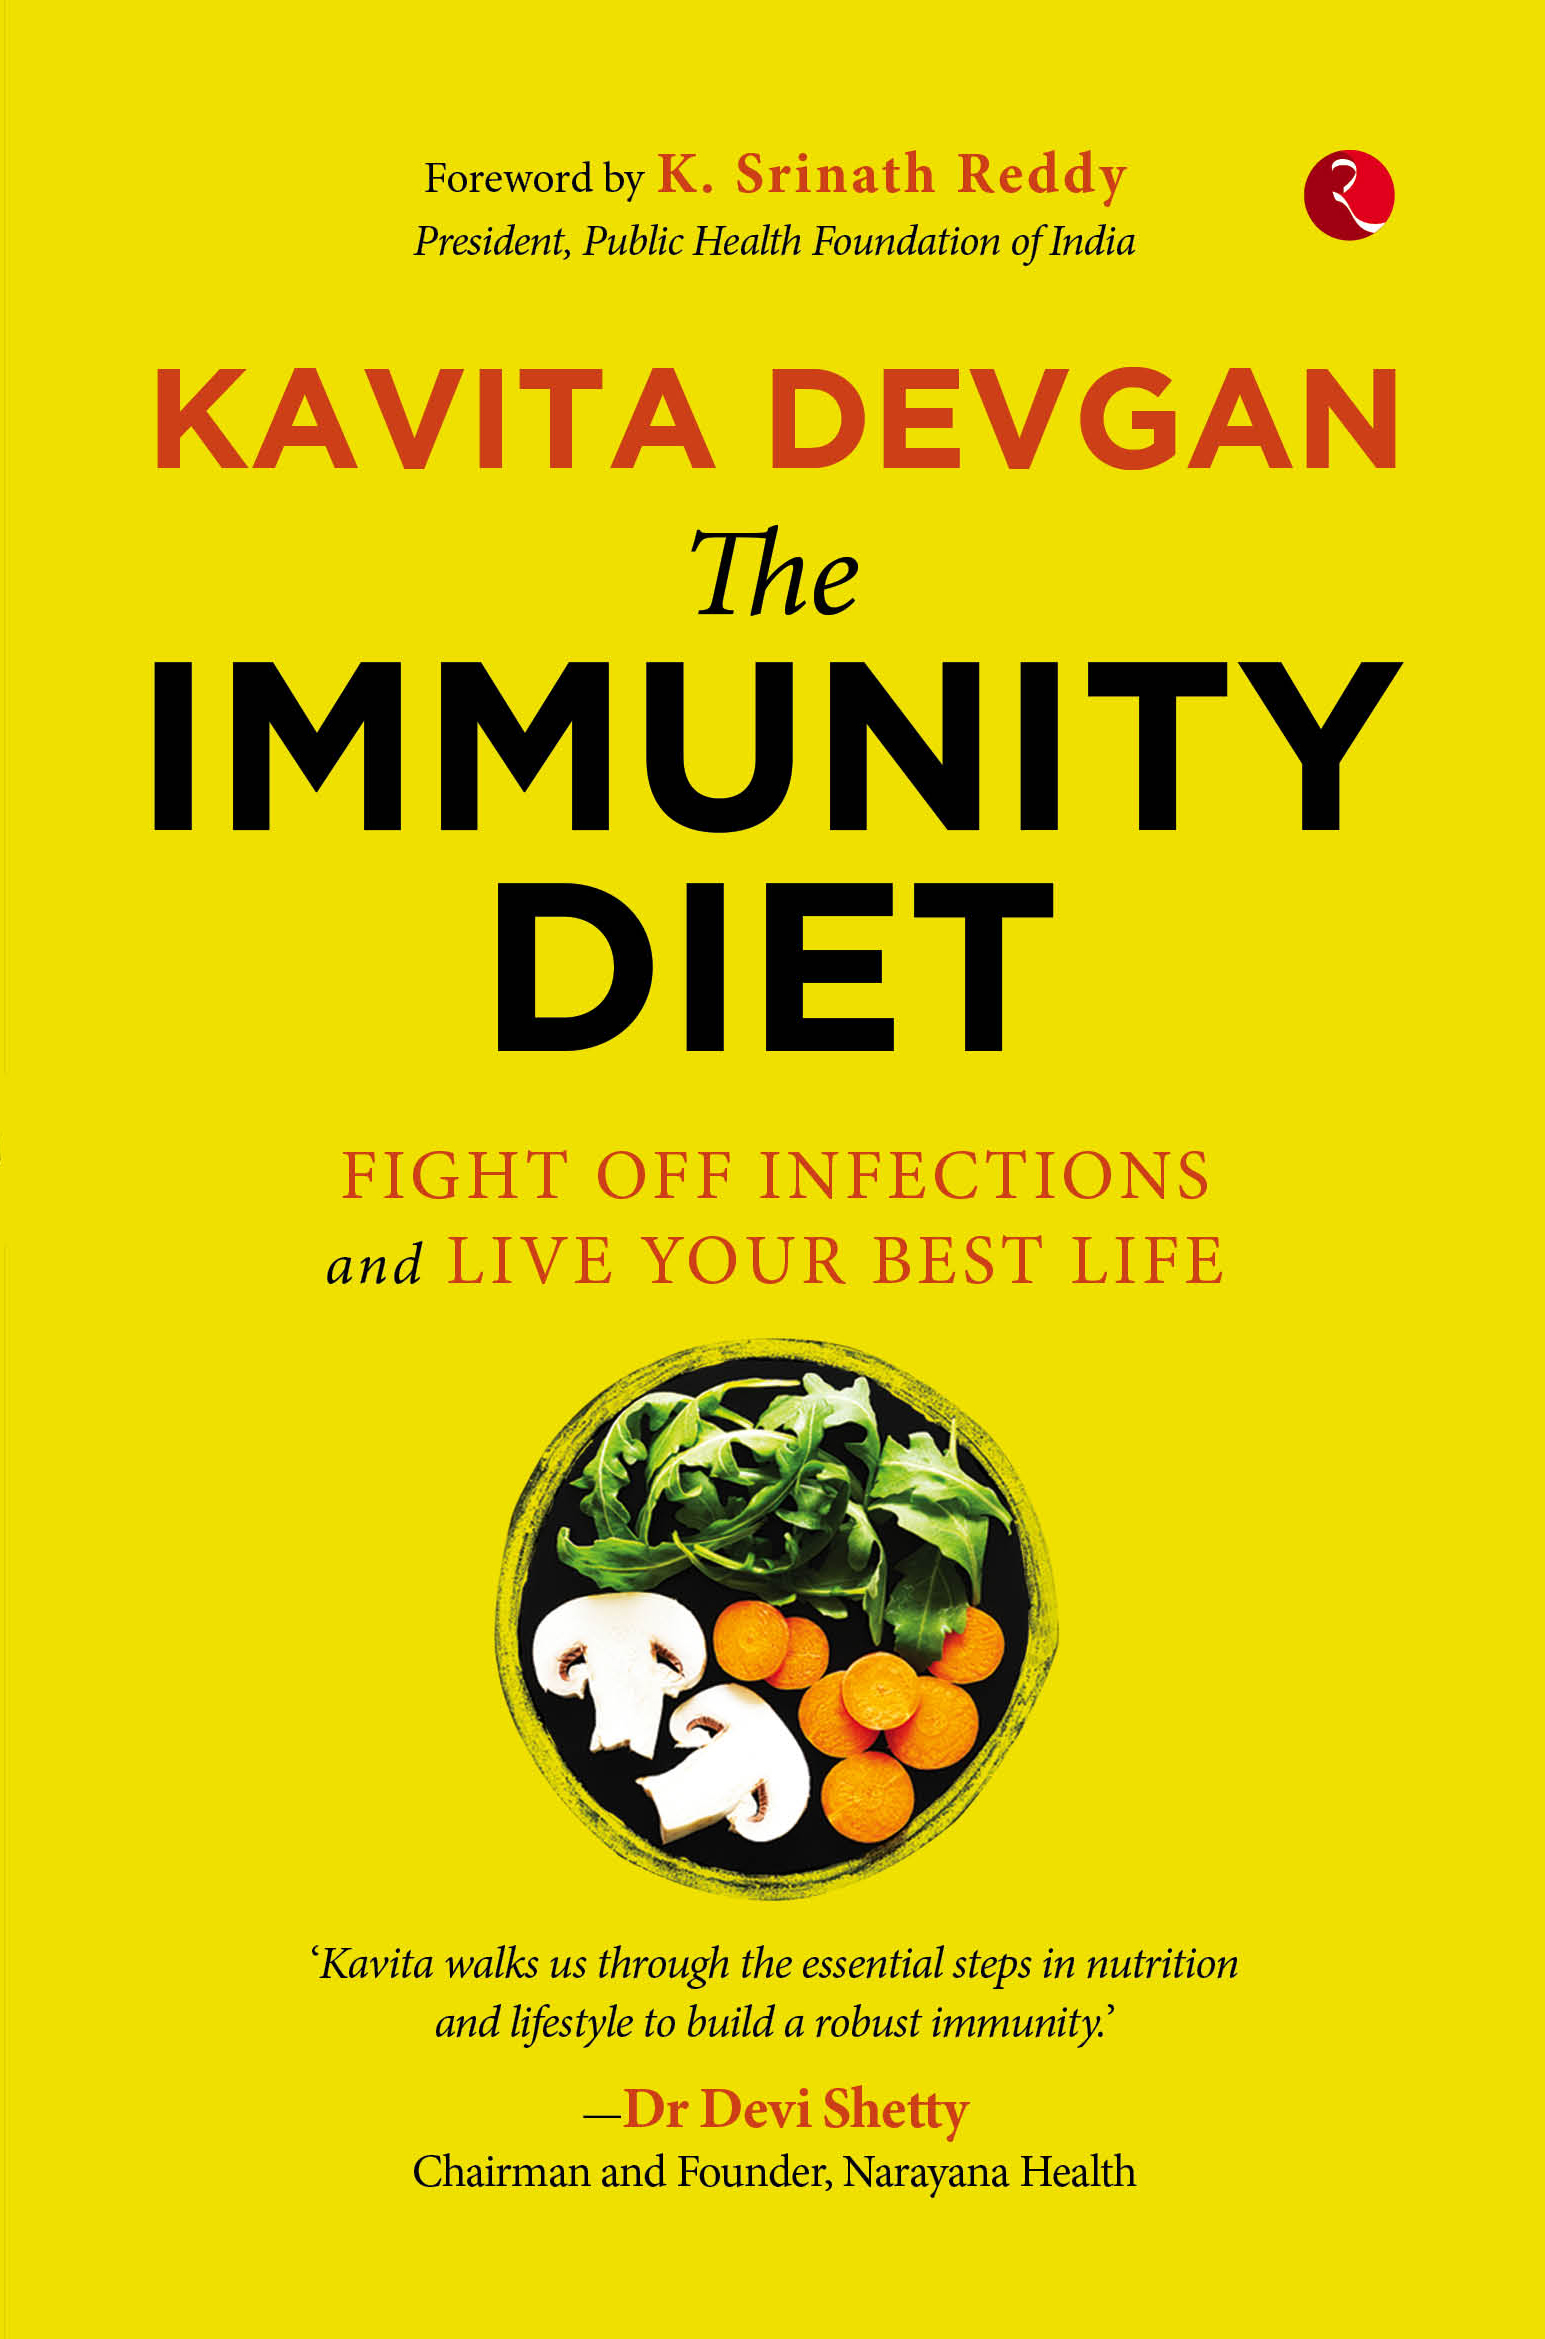 The Immunity Diet by Kavita Devgan